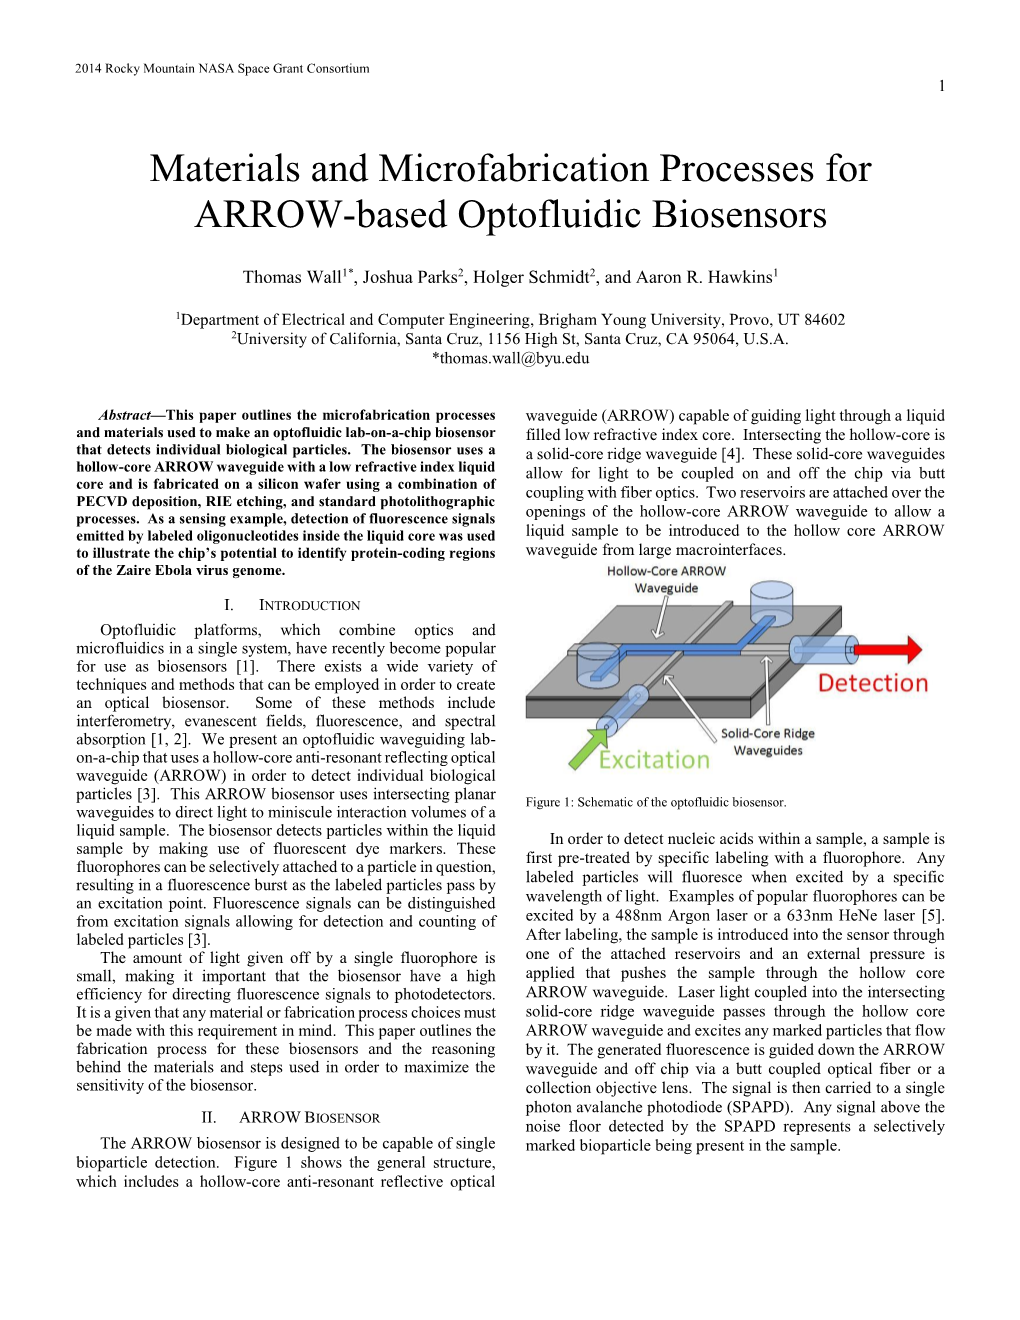 Materials and Microfabrication Processes for ARROW-Based Optofluidic Biosensors